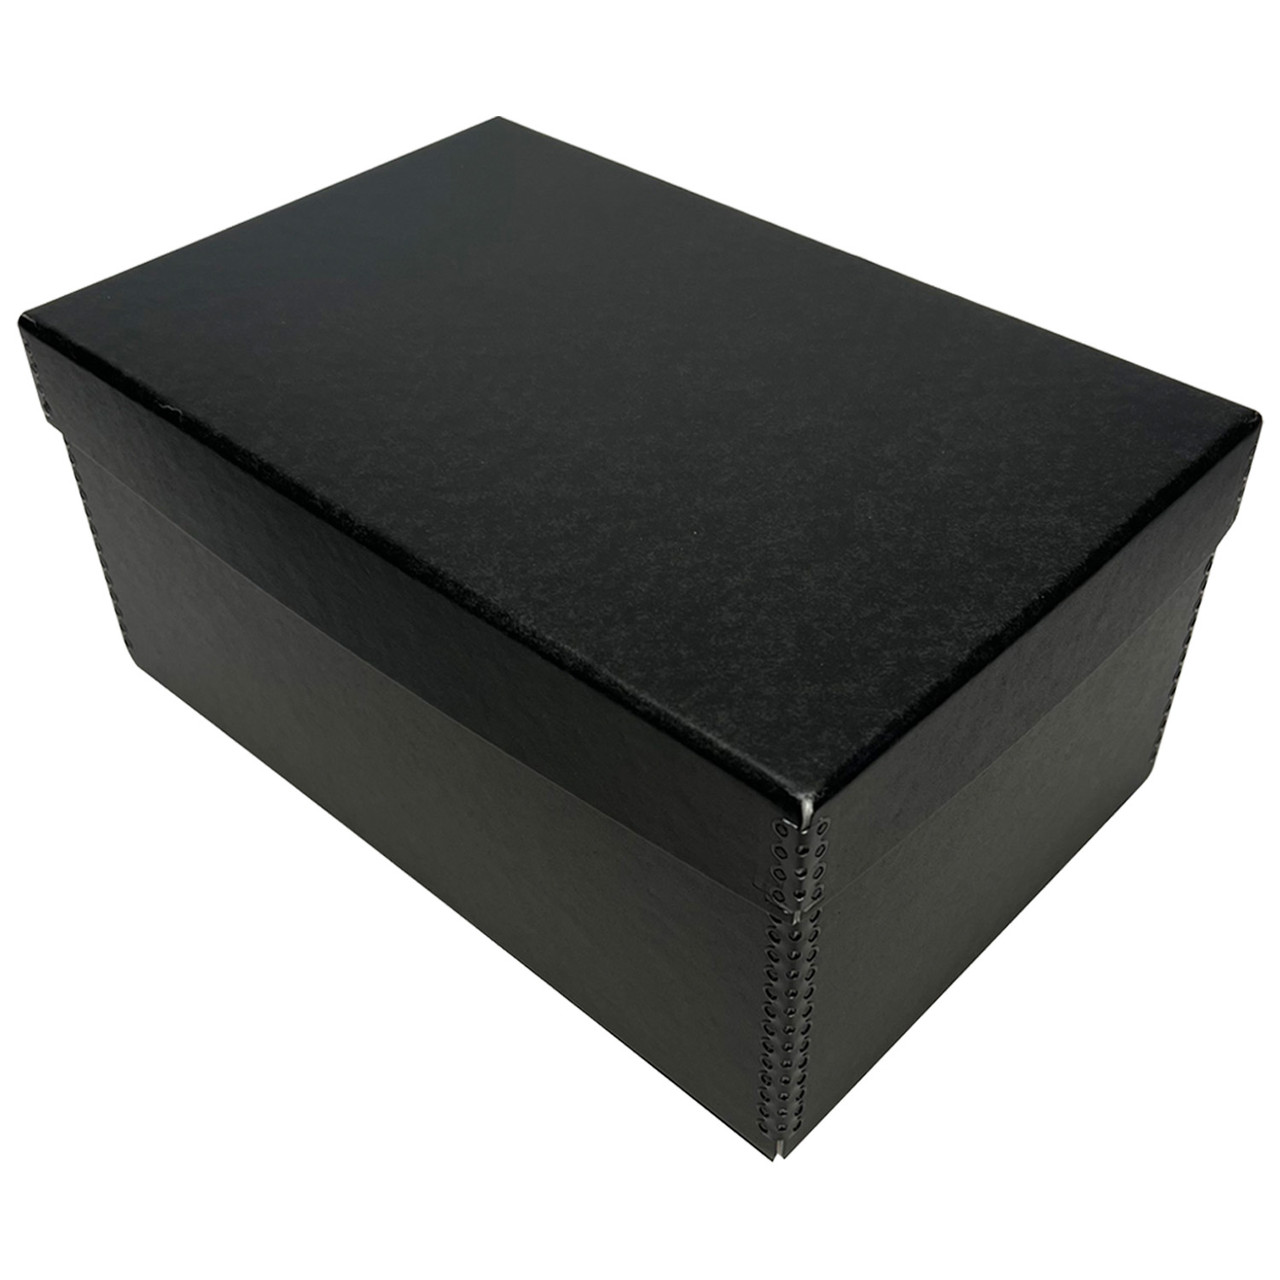 Print File Film and Print Archival Storage Box, Black